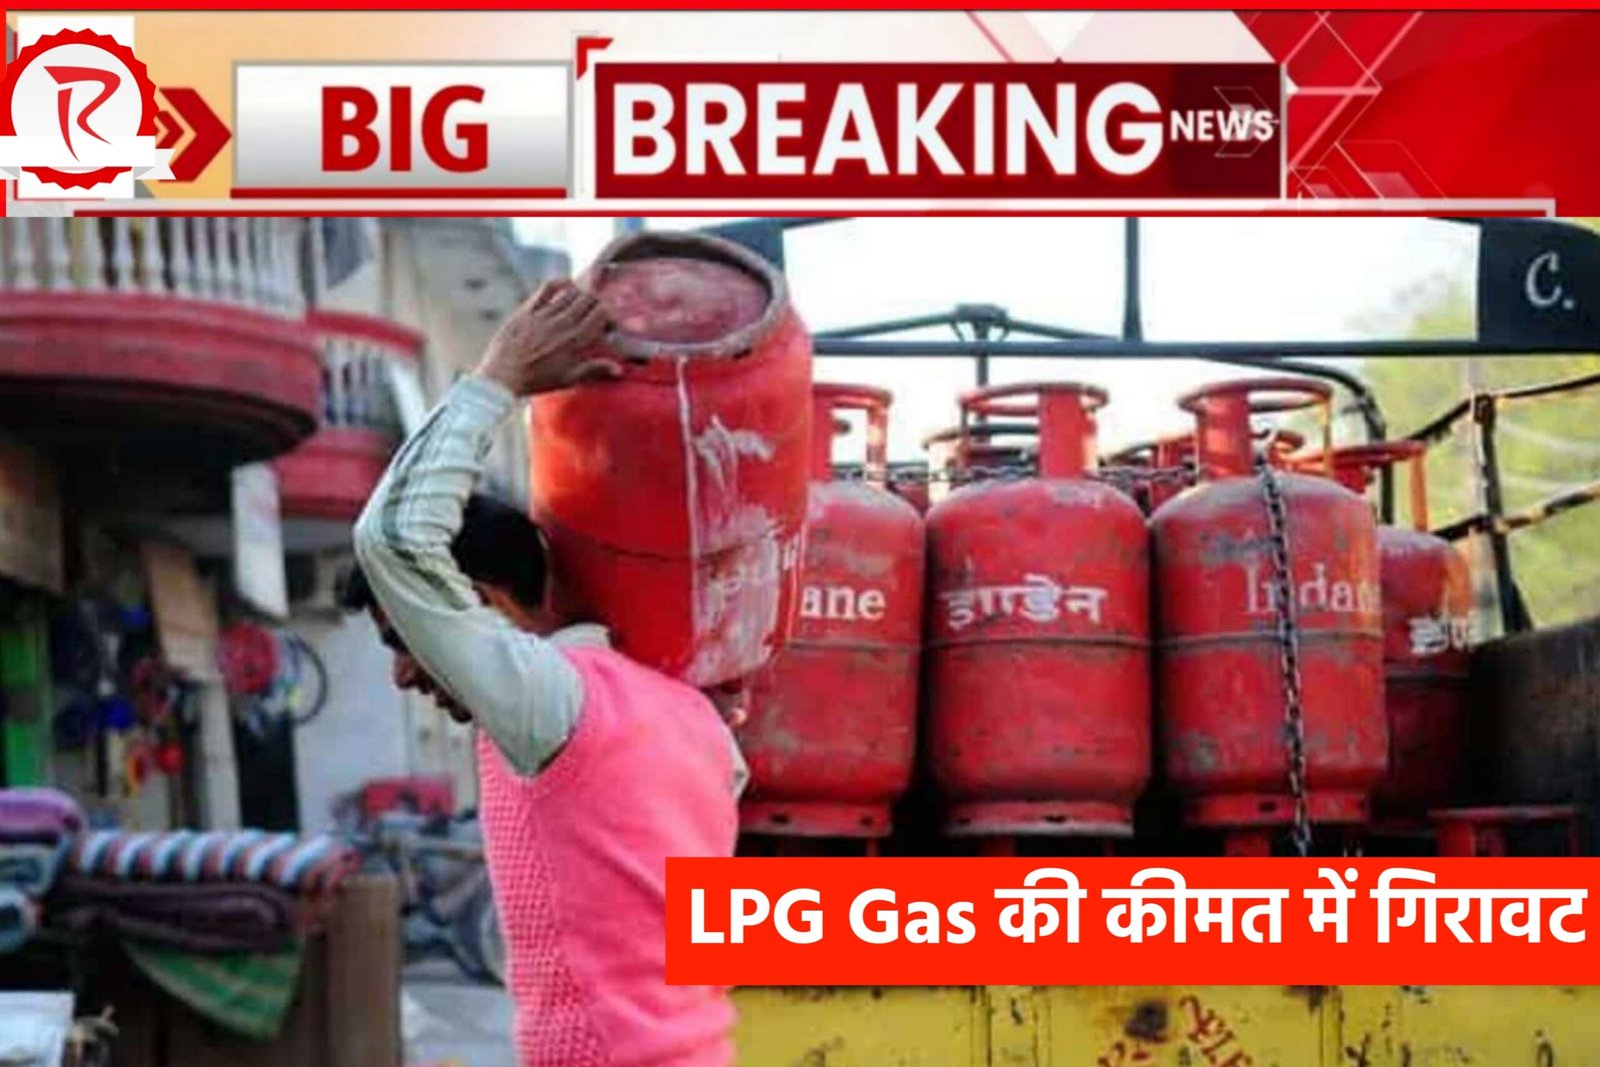 Today LPG Gas Price 14kg